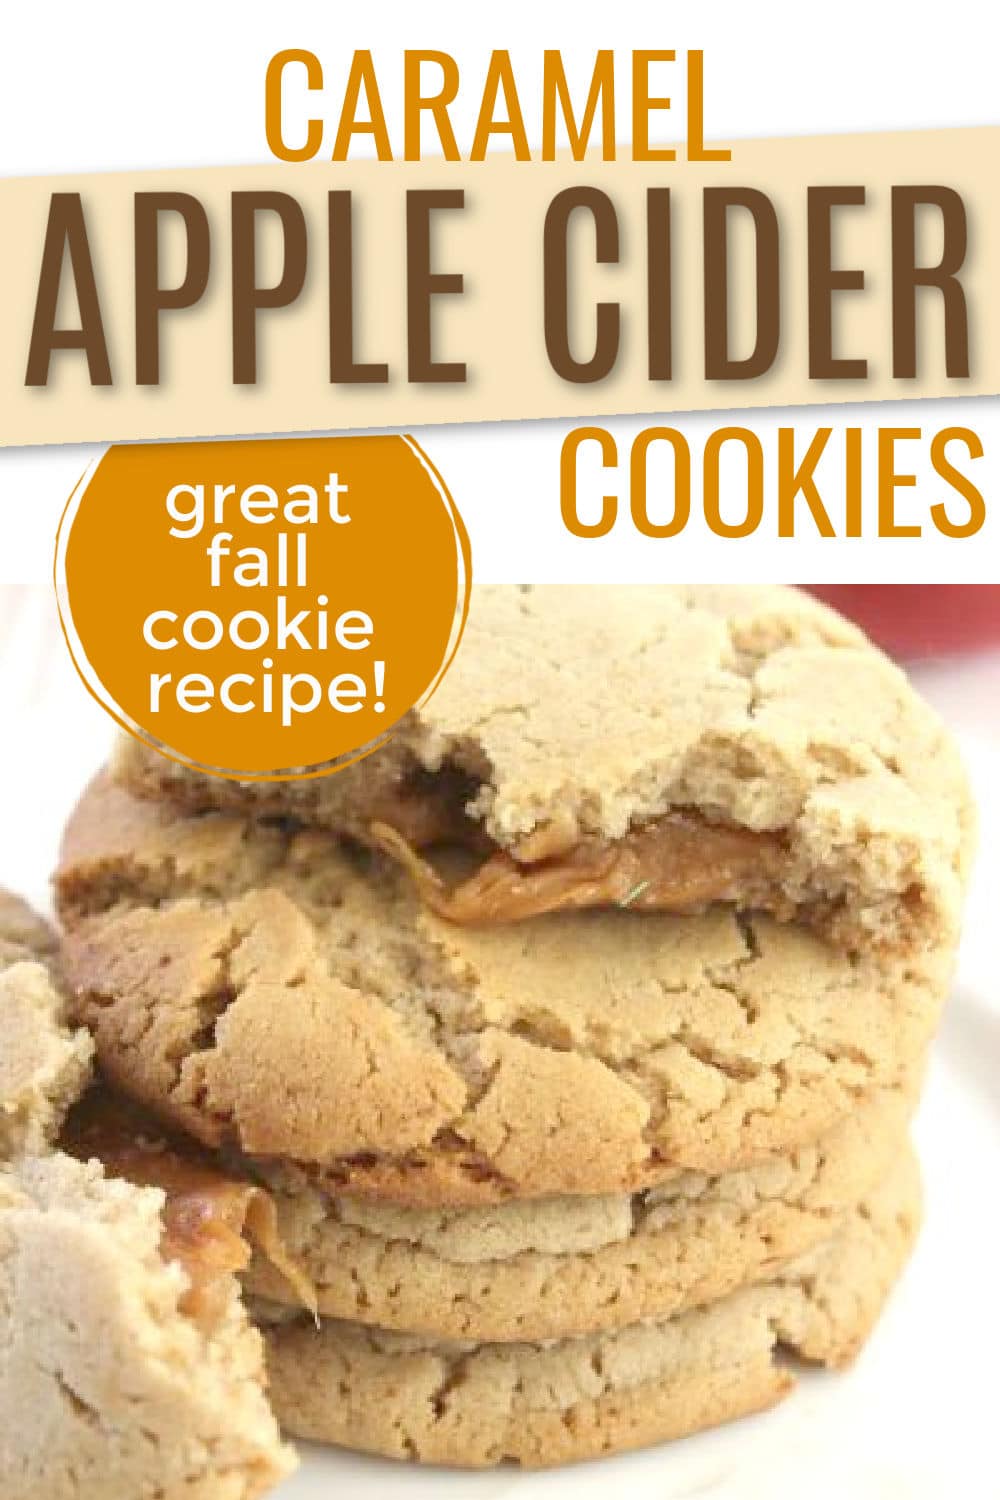 Caramel Apple Cider cookies